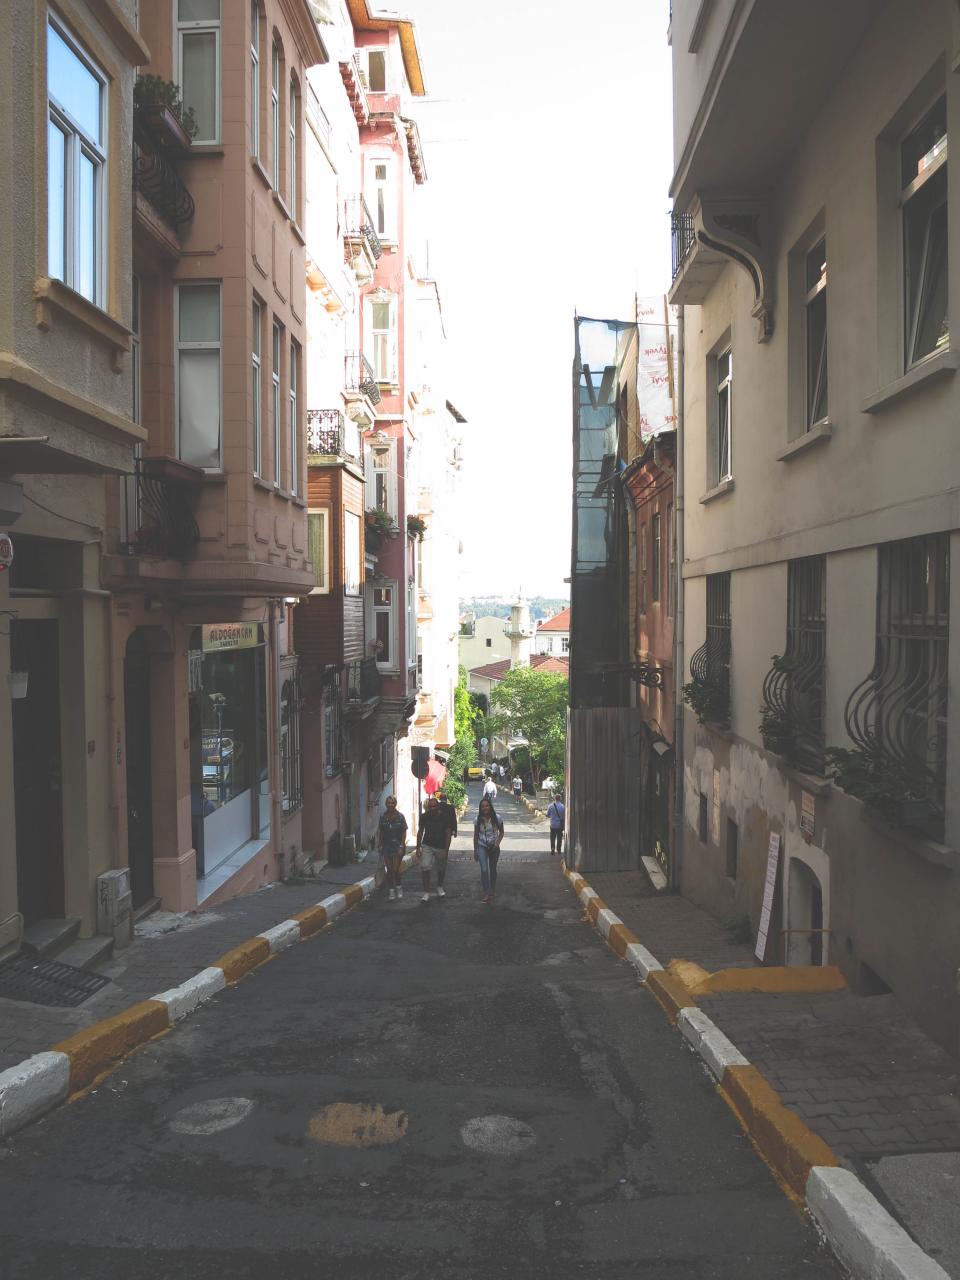 walking turkey Taksim streets stores sidewalk shops people pedestrians Istanbul city buildings alley 